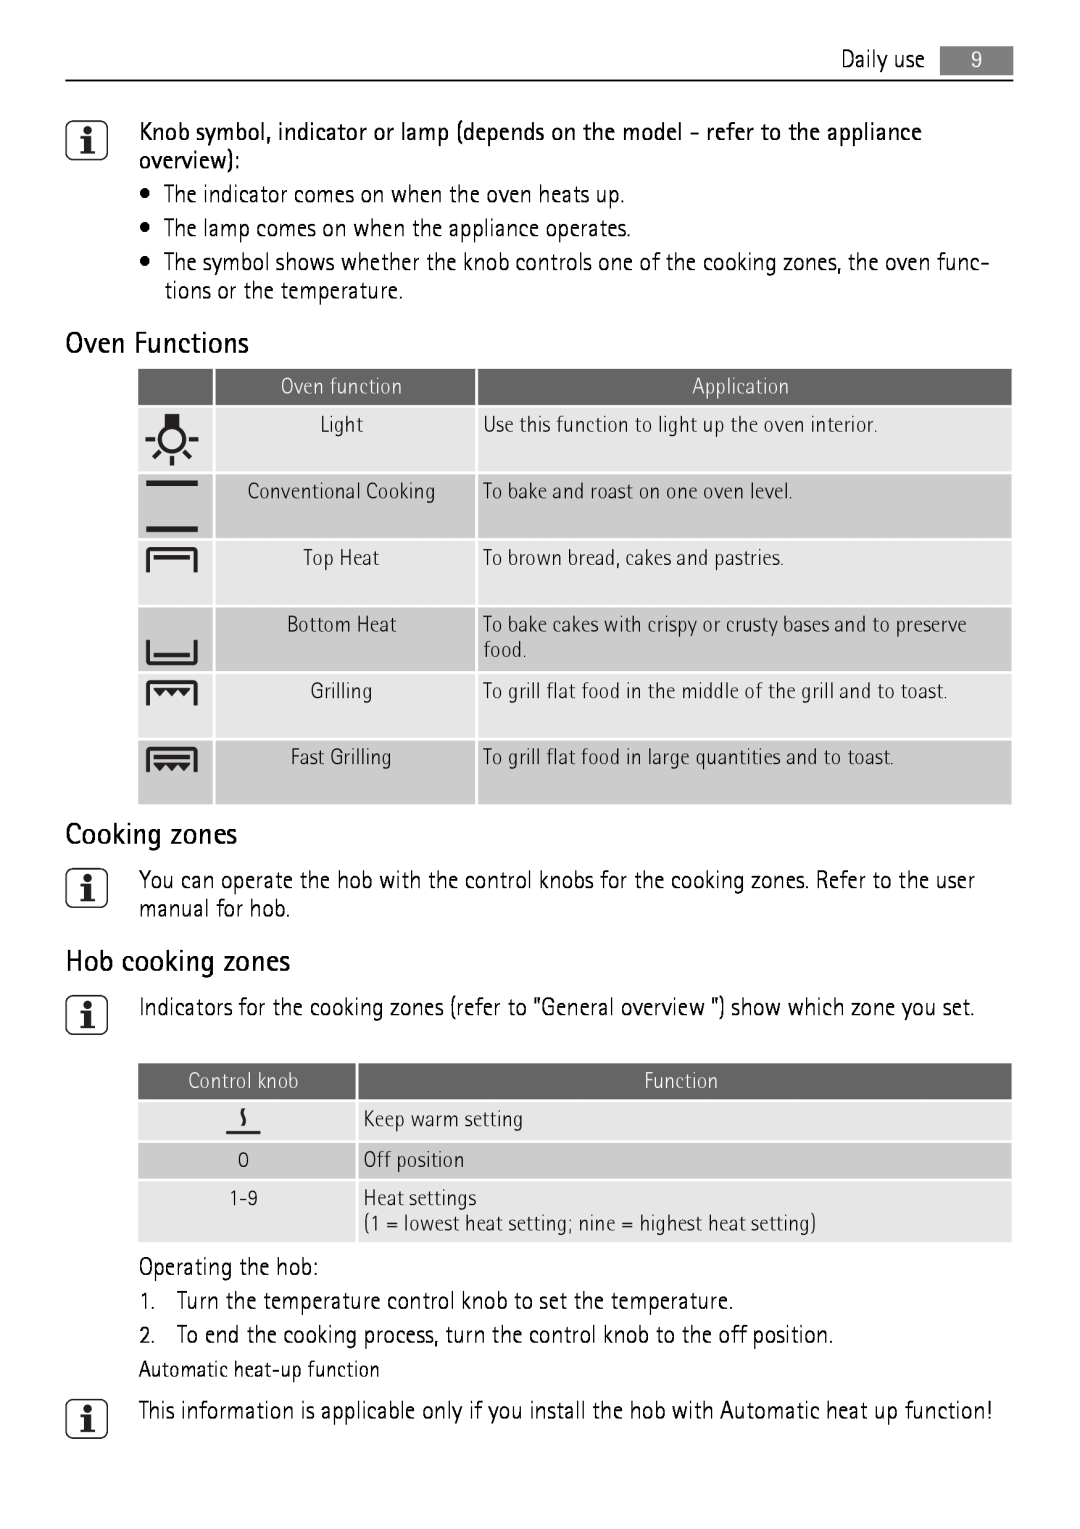 AEG EE1000000 user manual Oven Functions, Cooking zones, Hob cooking zones 